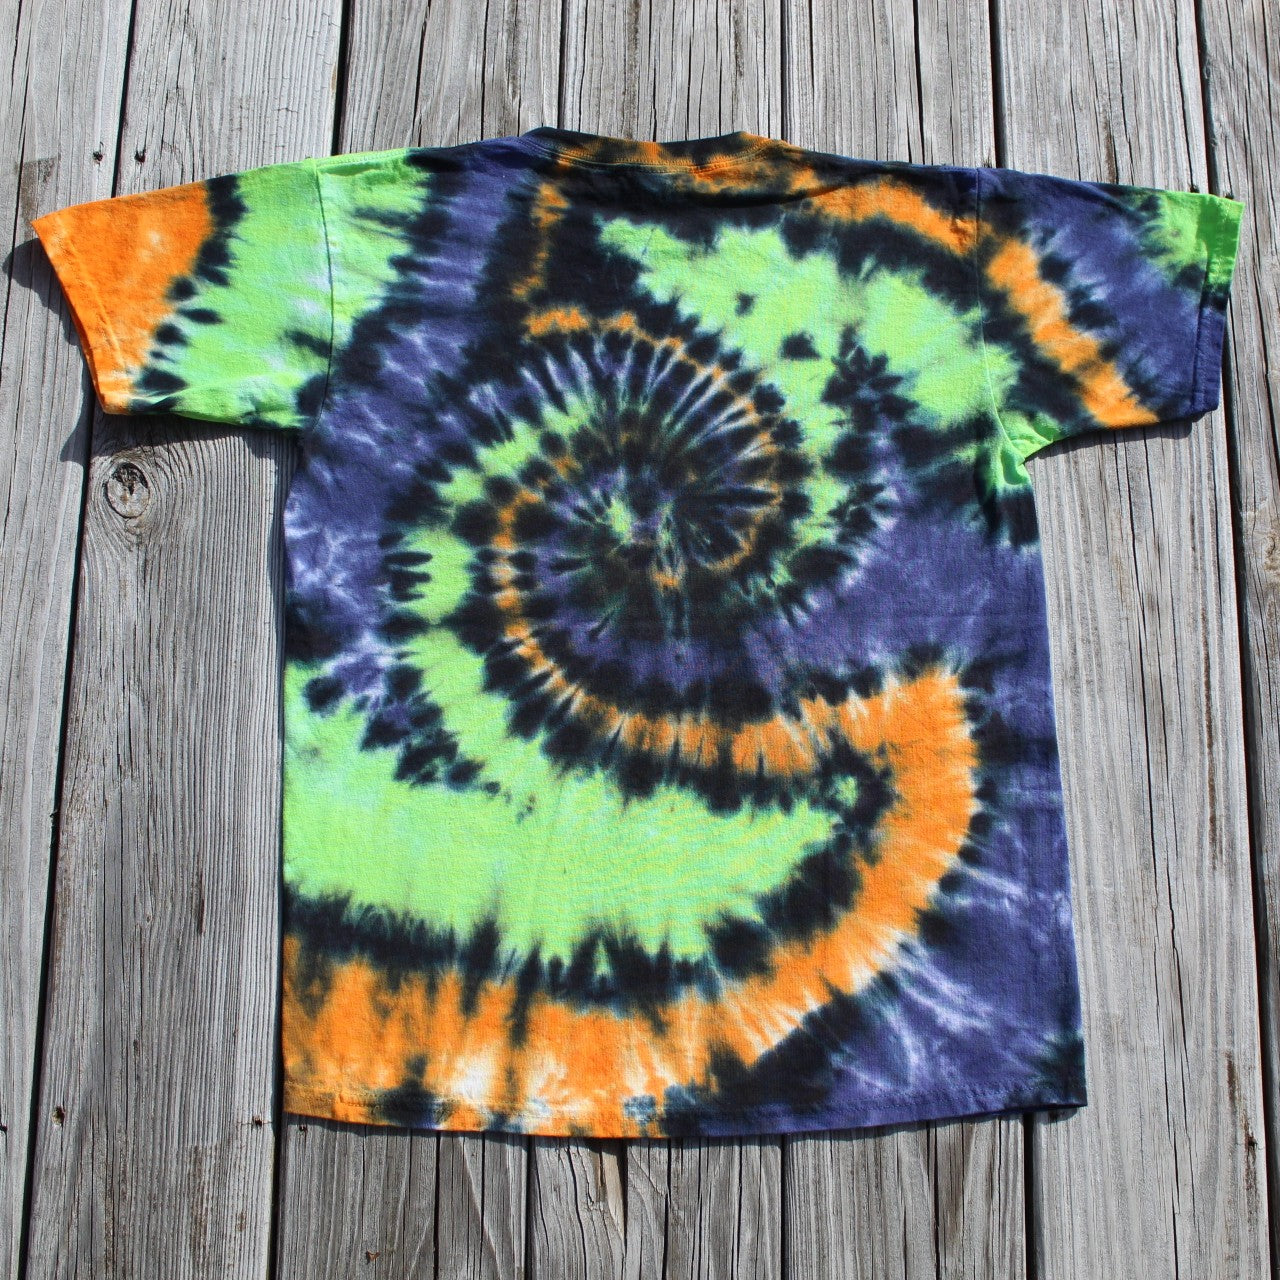 Spiral Tie Dye Kids T-Shirt